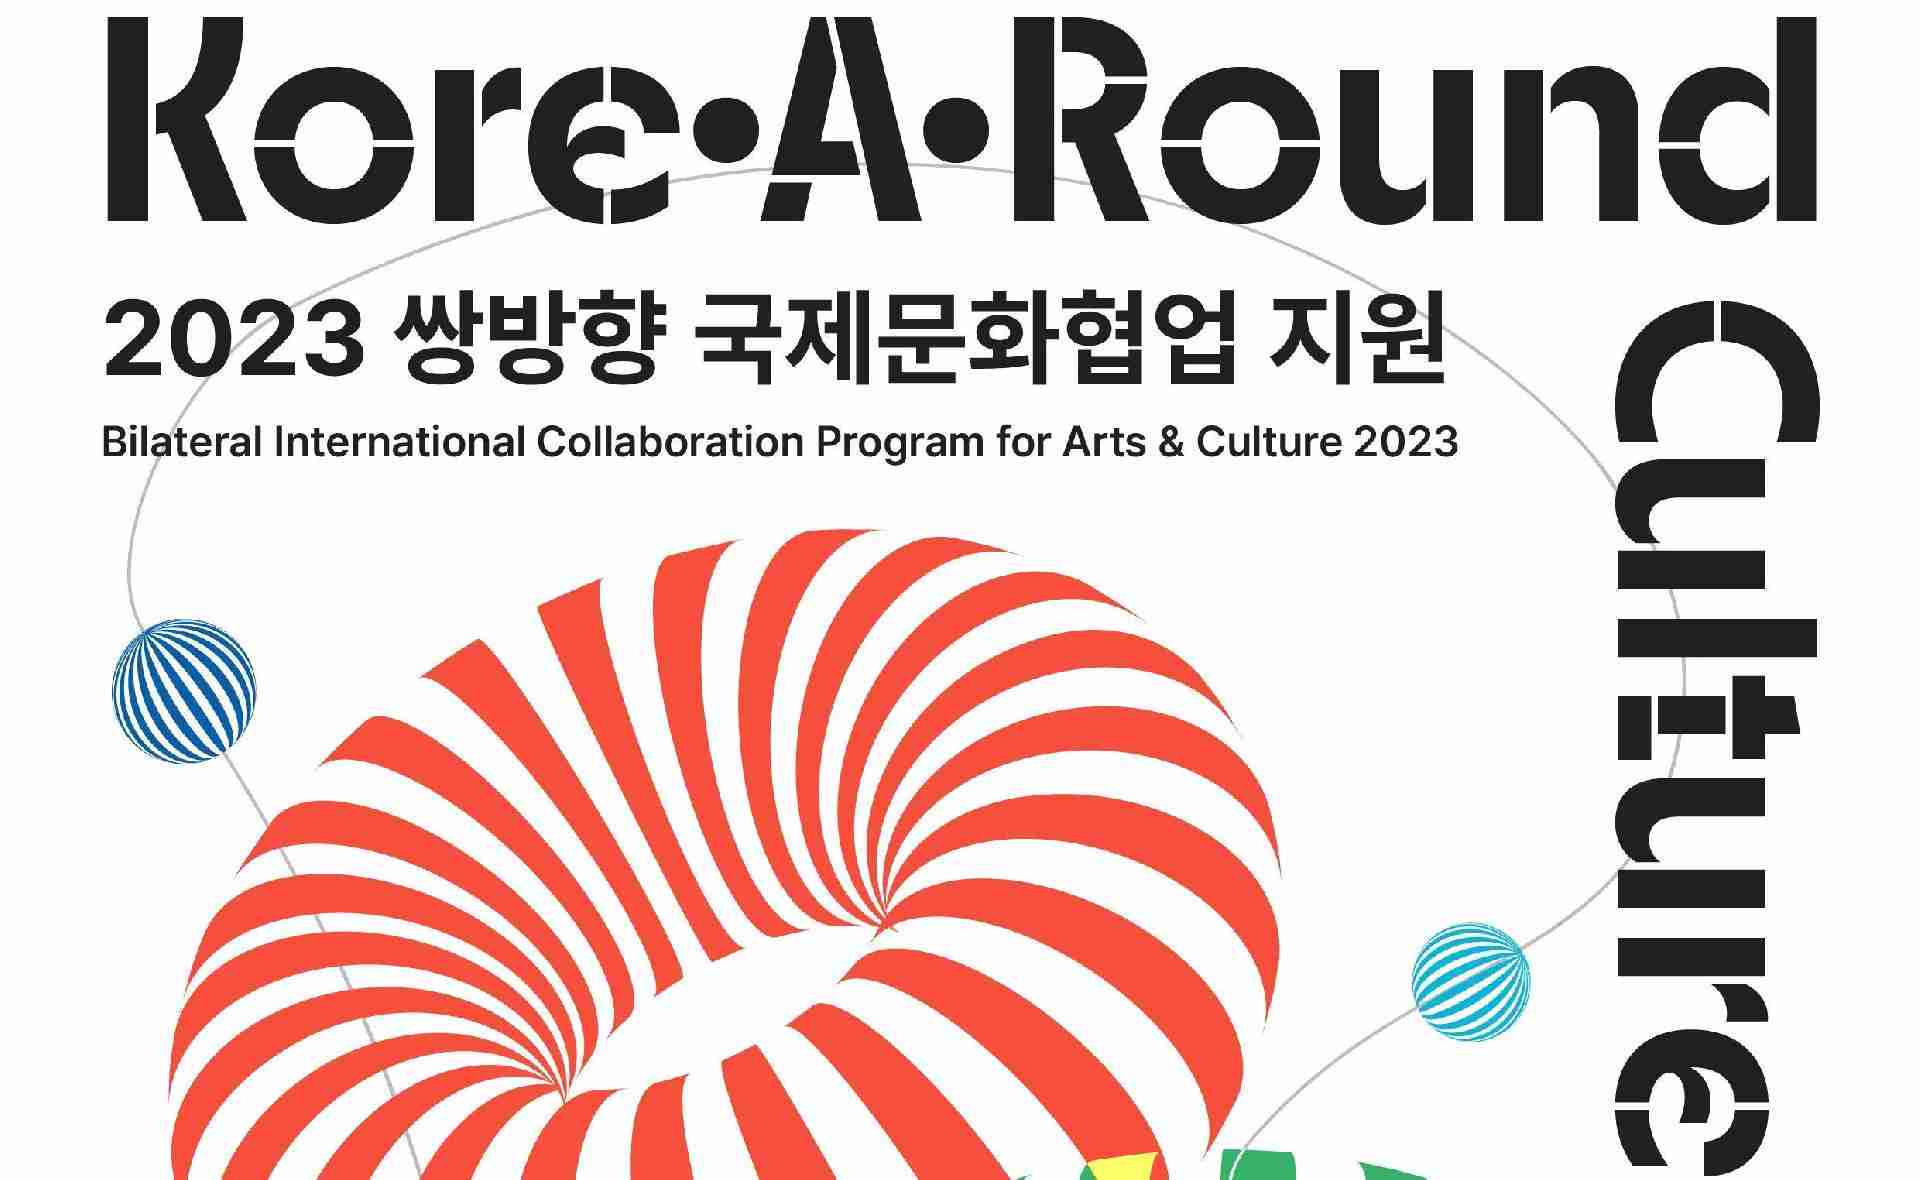 Bilateral International Collaboration Program for Arts & Culture 2023 